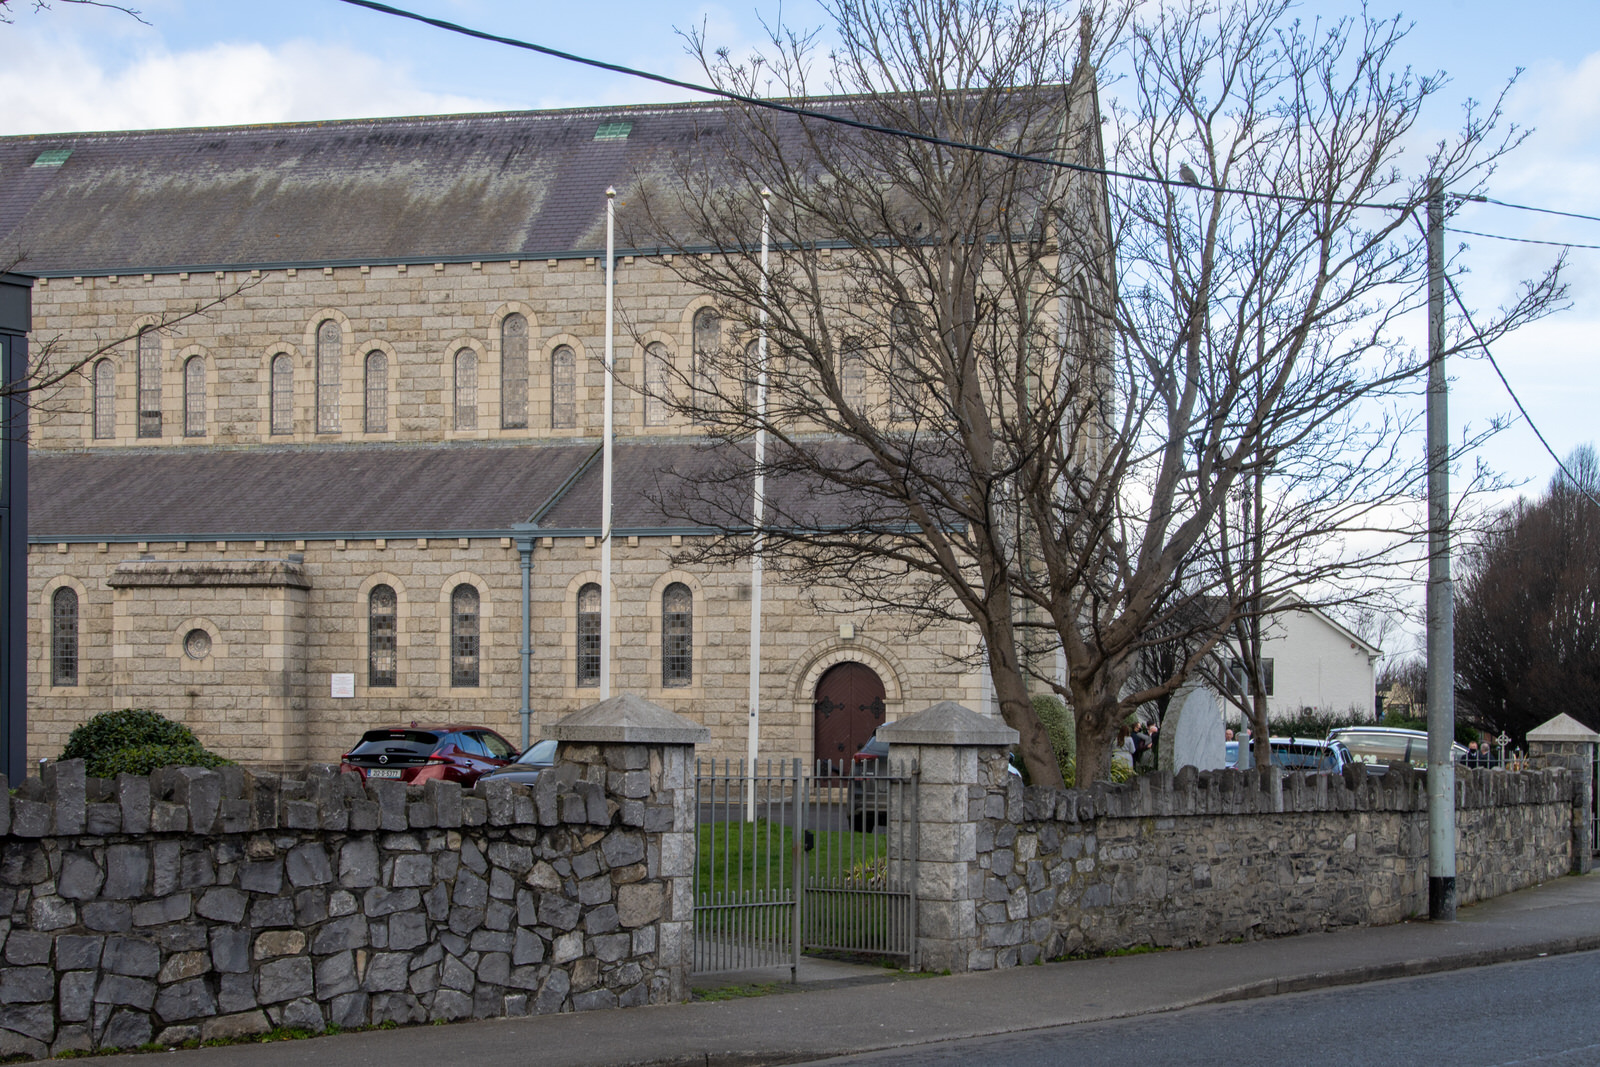 ST AGNE'S CATHOLIC CHURCH IN CRUMLIN VILLAGE